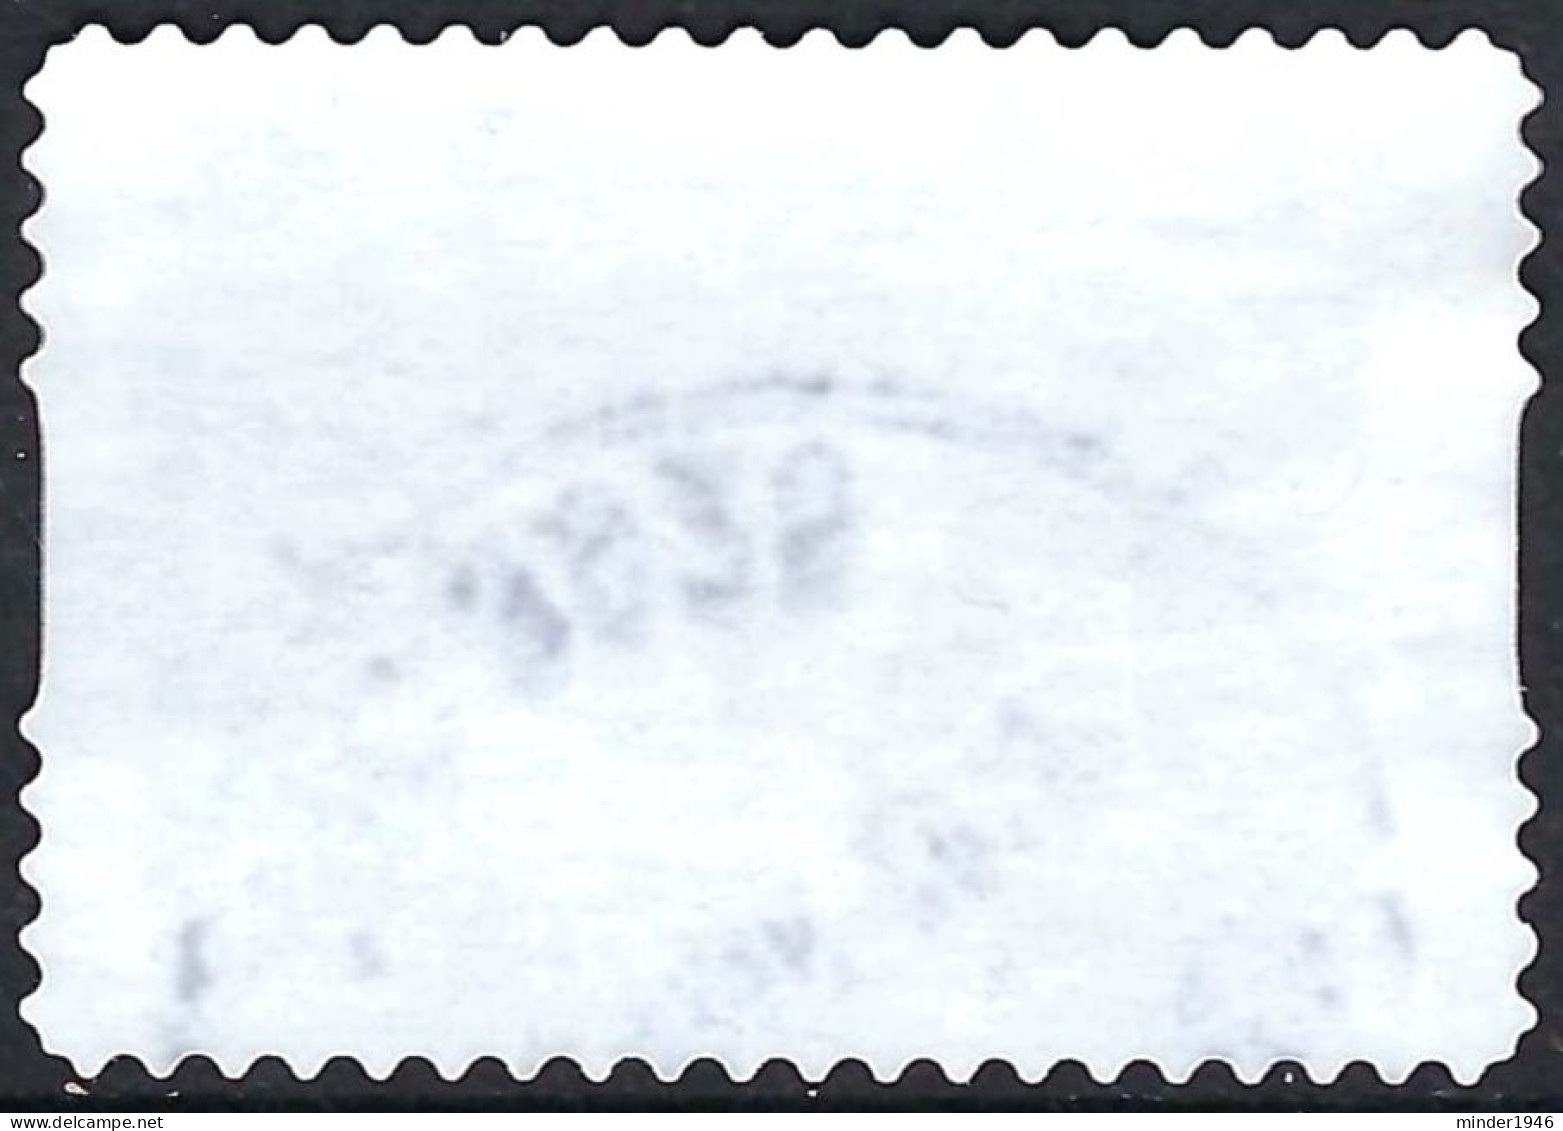 AUSTRALIA 2014 QEII 70c Multicoloured, Bush Ballads-Mulga Bills Bicycle Self Adhesive Stamp SG4179 FU - Used Stamps